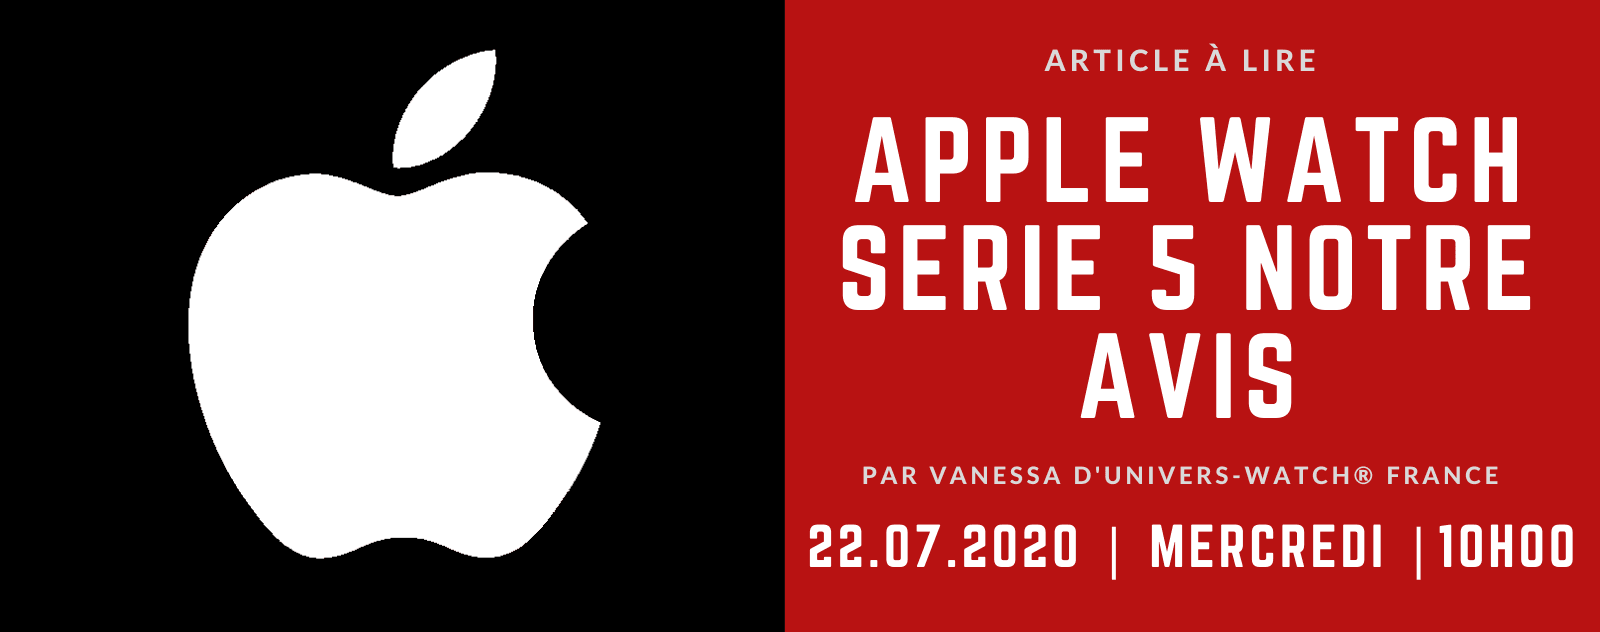 Apple Watch Série 5 Avis | Univers-Watch